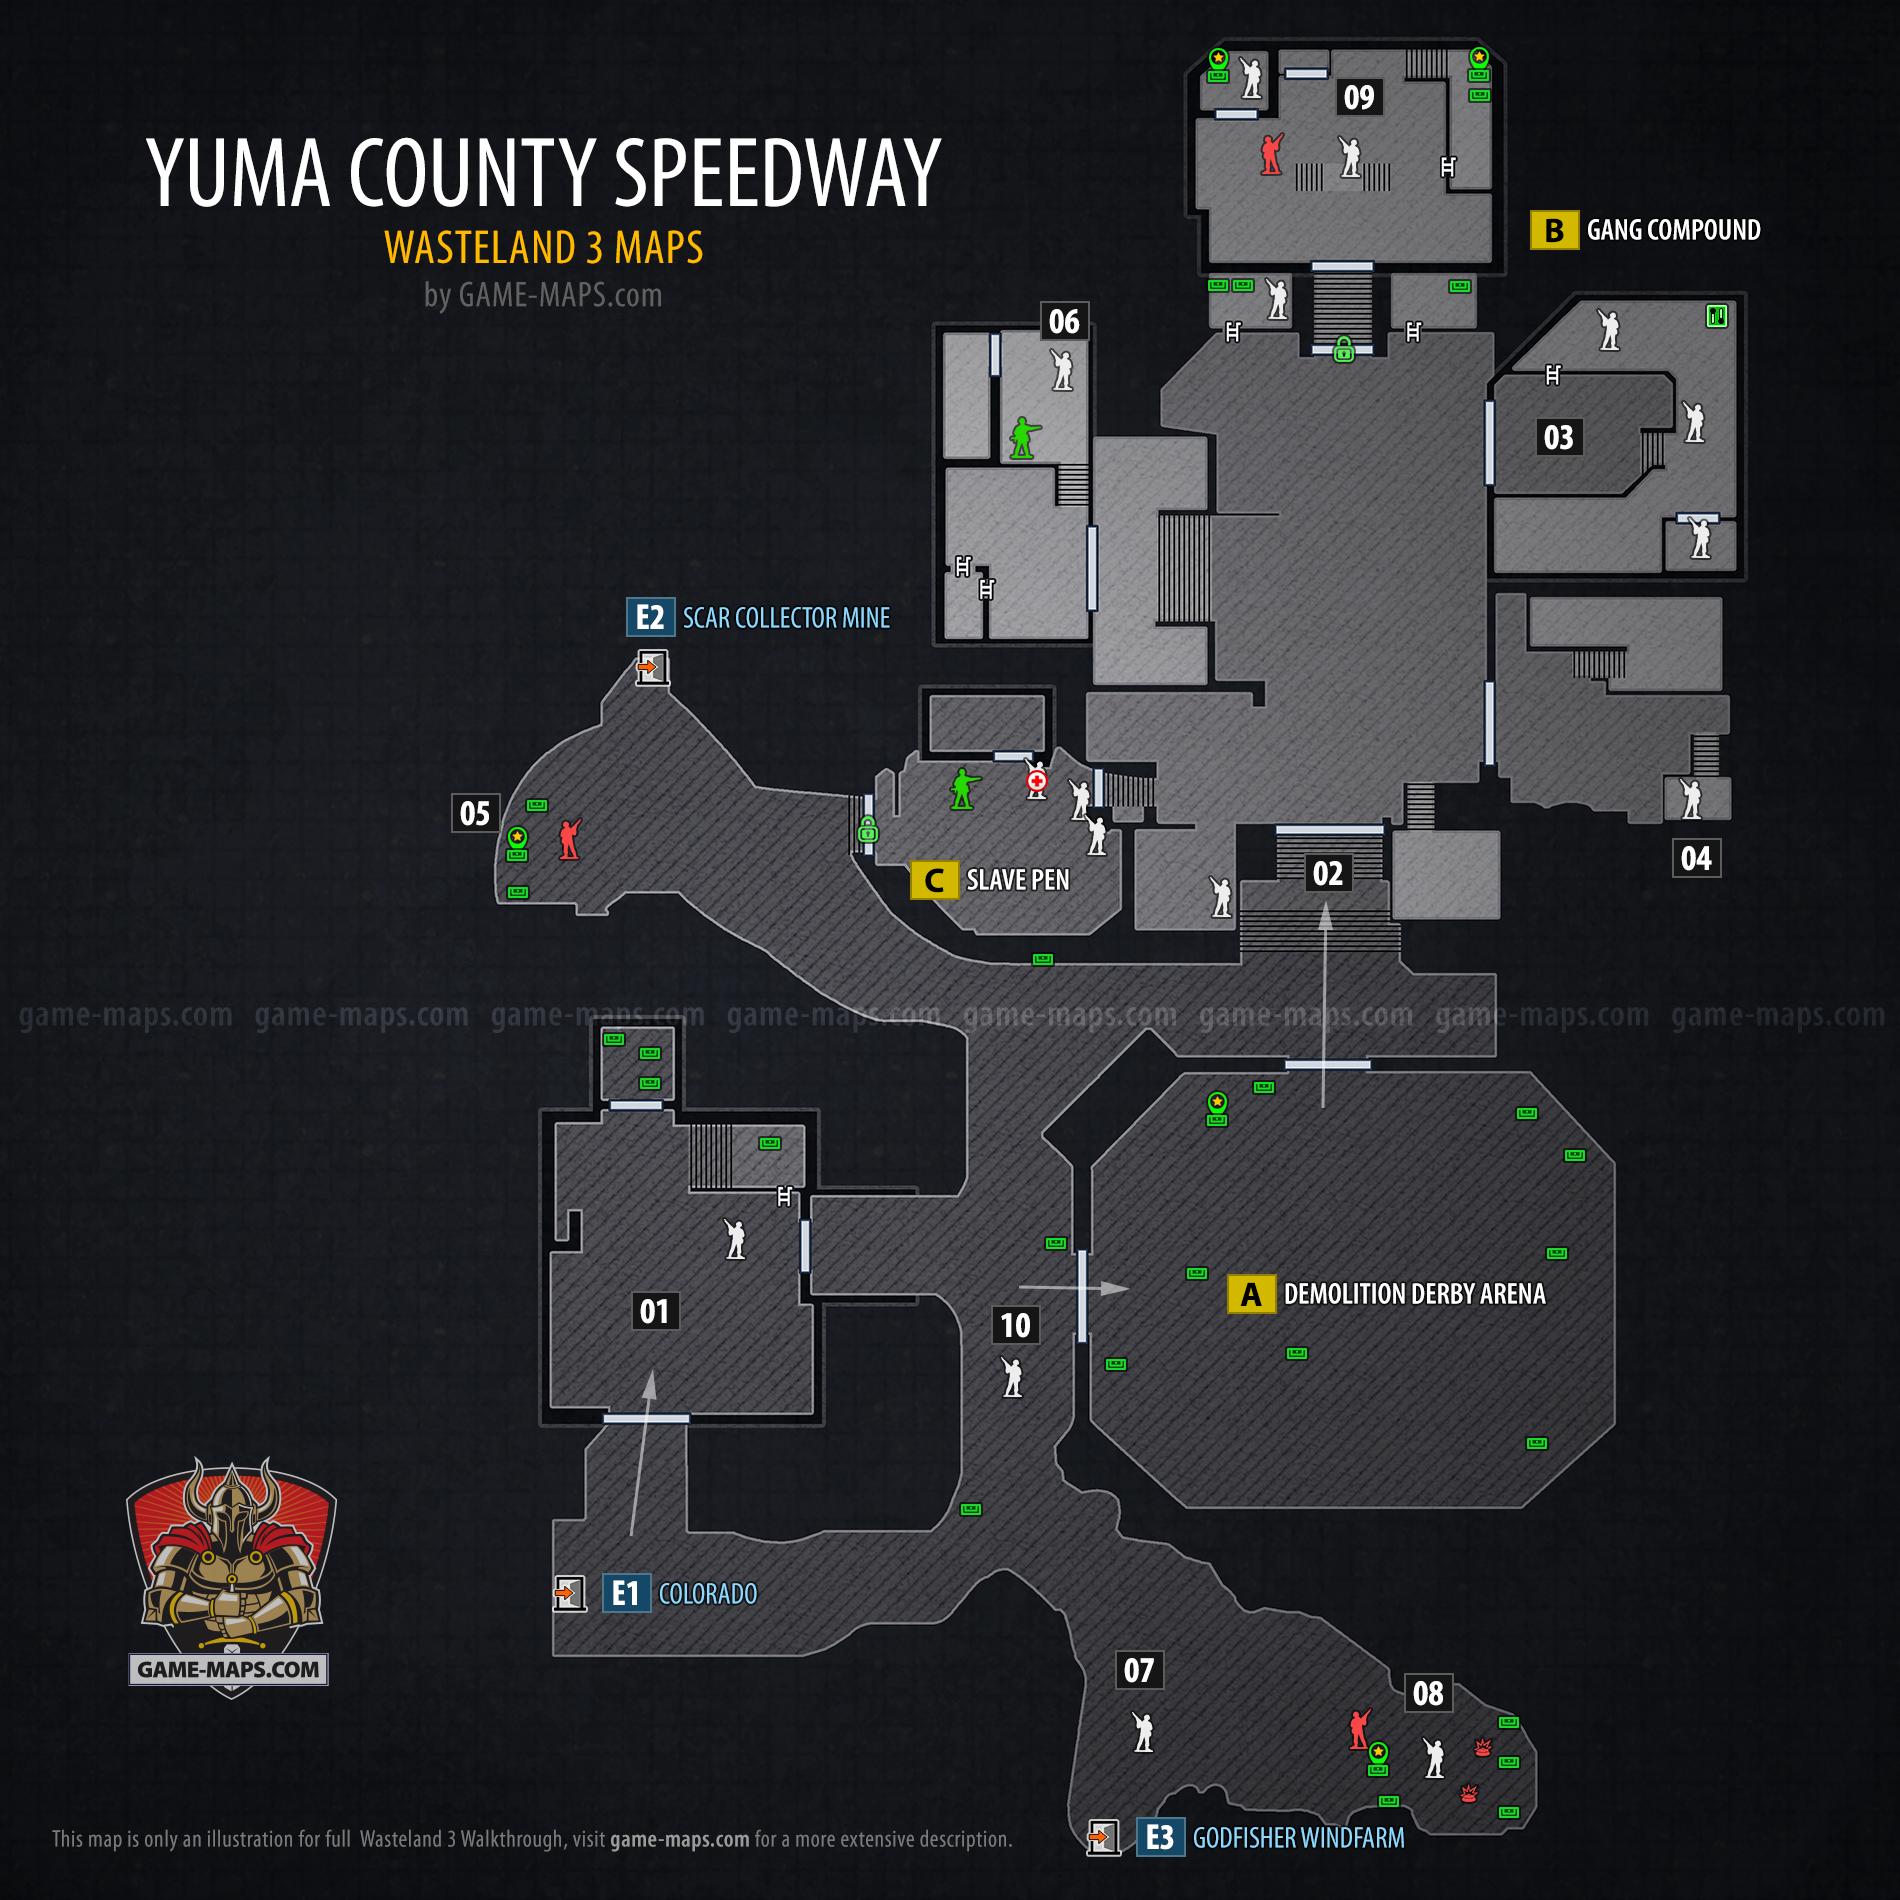 Yuma County Speedway Map - Wasteland 3